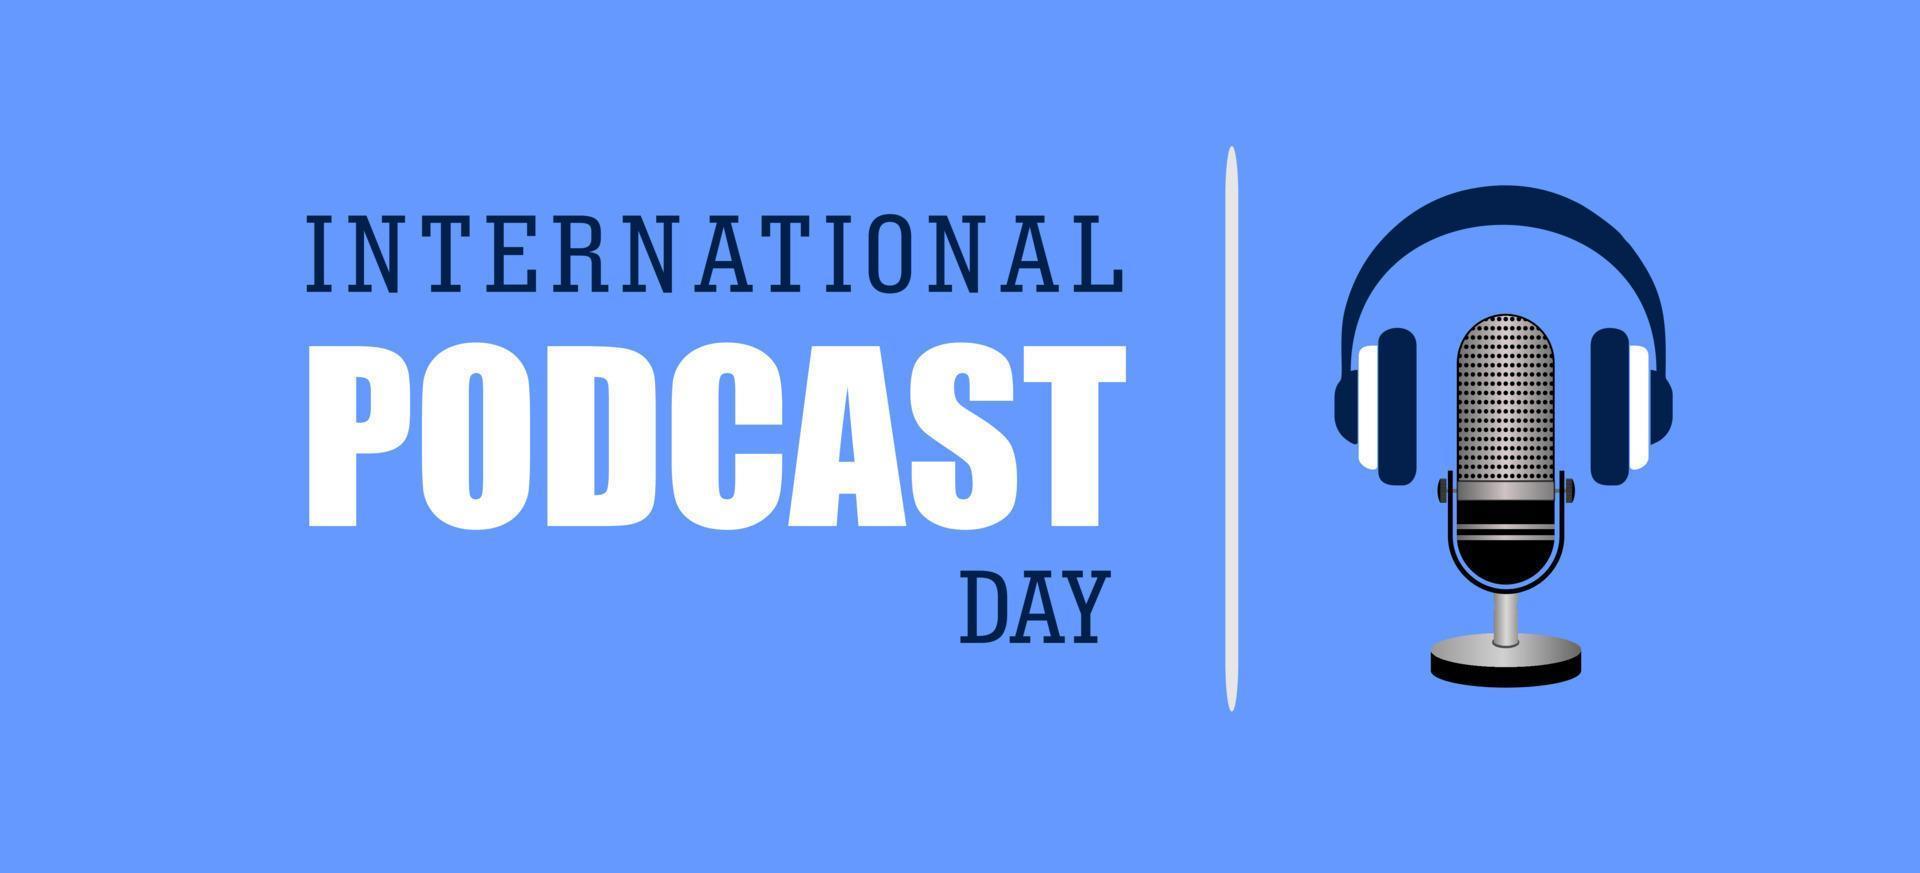 Internationaler Podcast-Tag, Mikrofon-Podcast, Vektorgrafiken und Text vektor